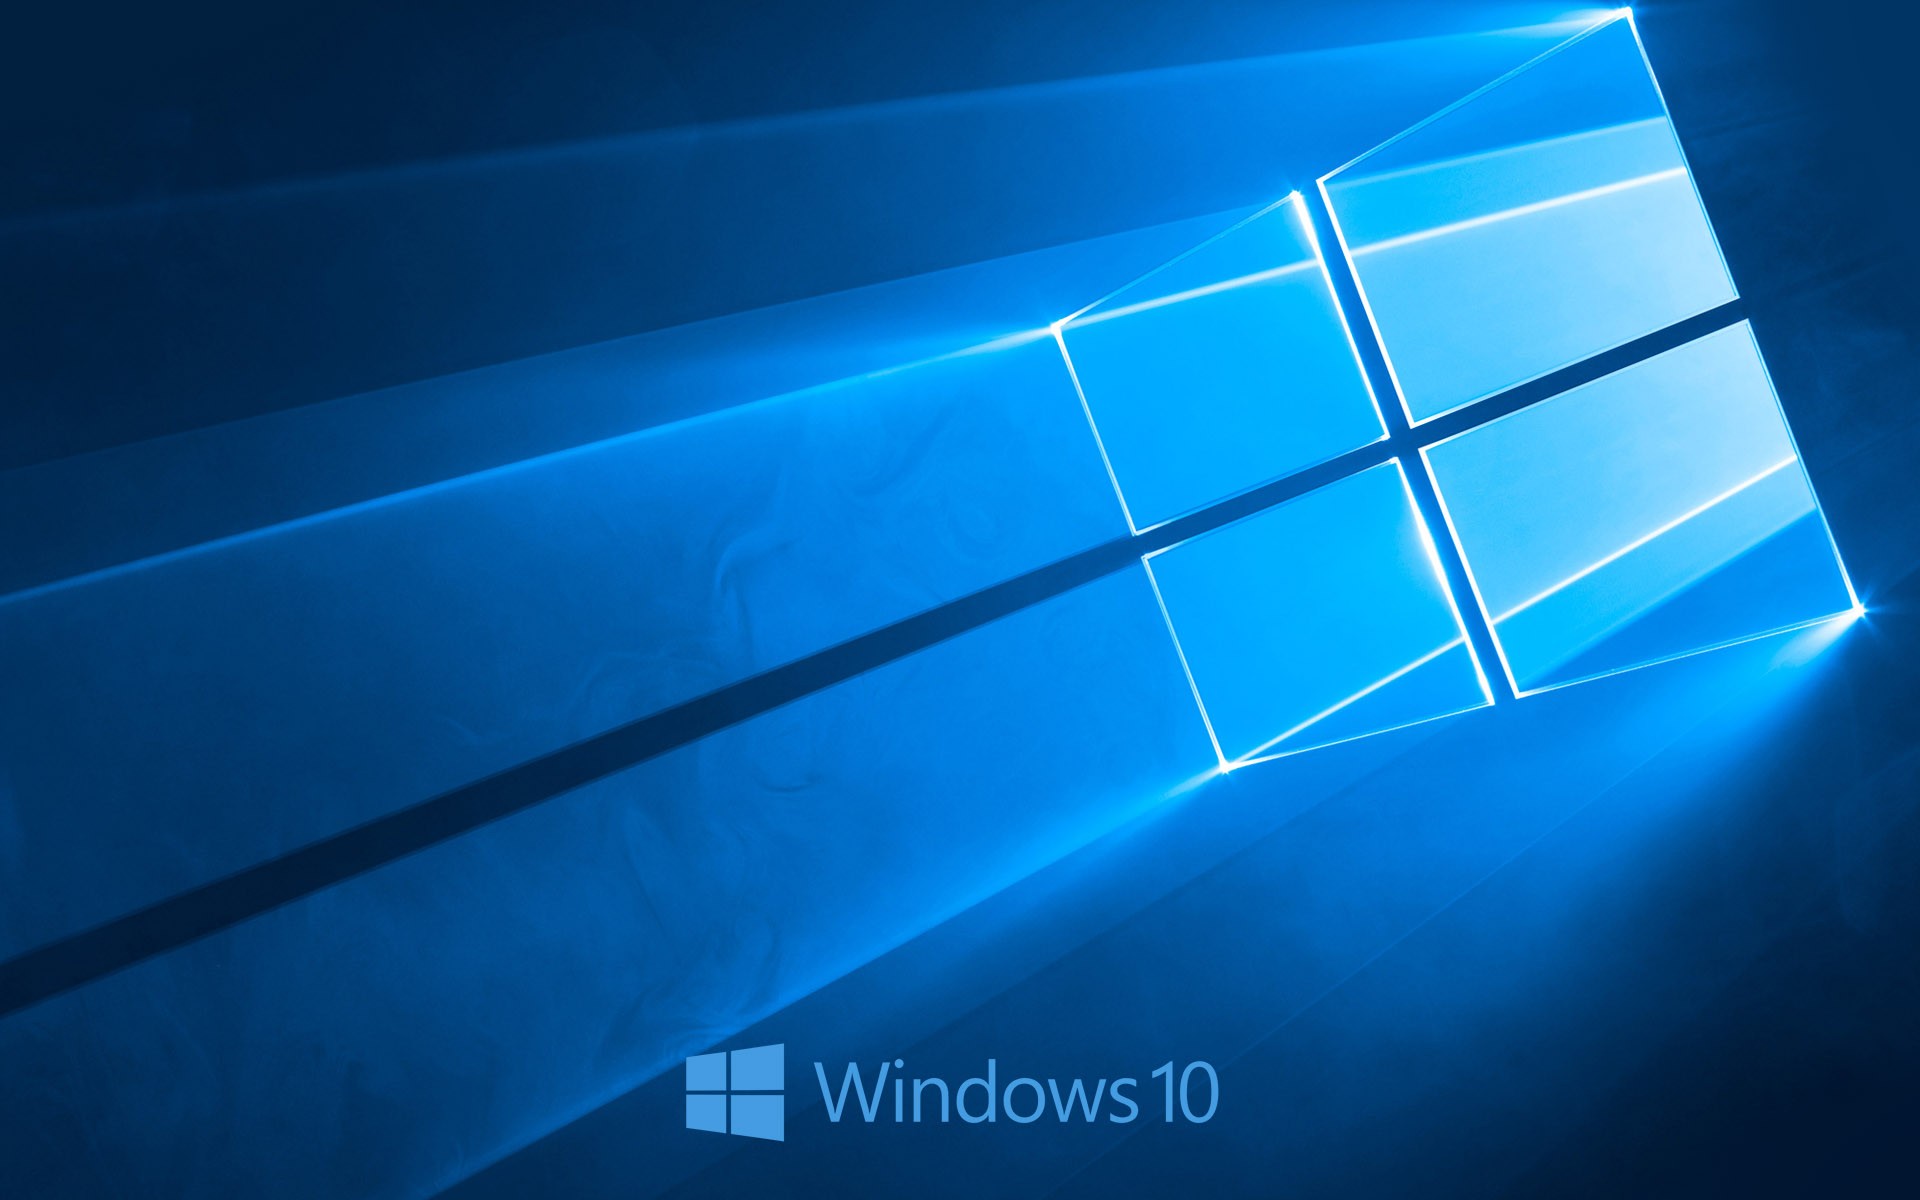 Windows 10 desktop wallpaper ·① Download free cool ...